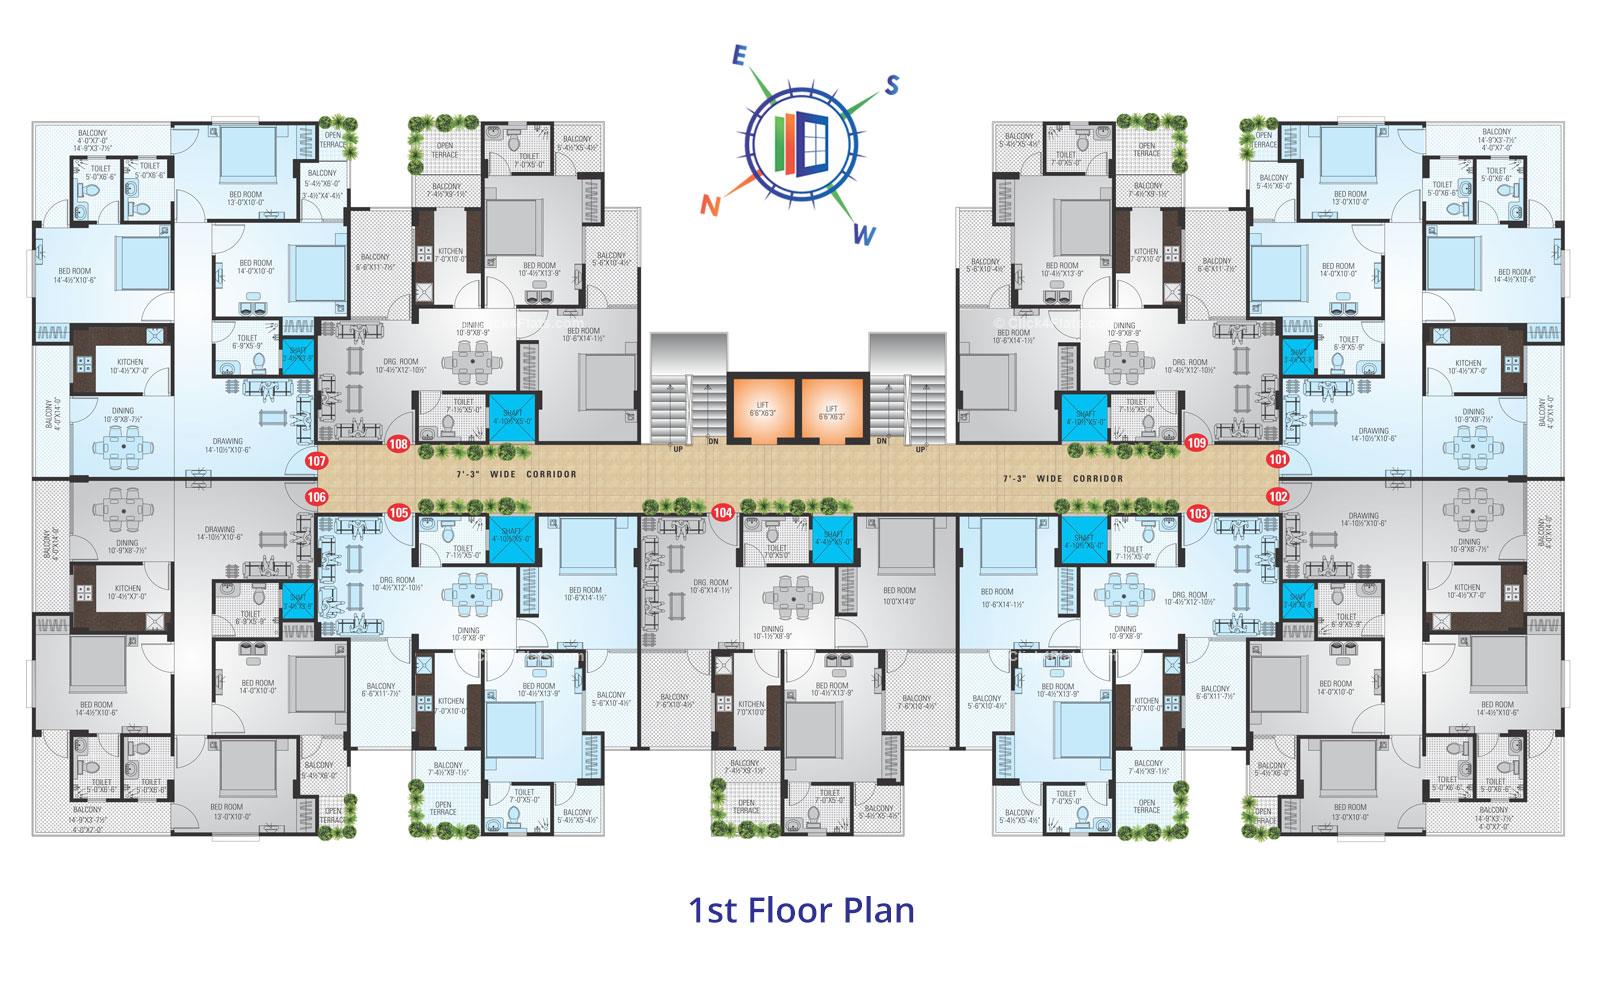 SDC Keystone First Floor Plan